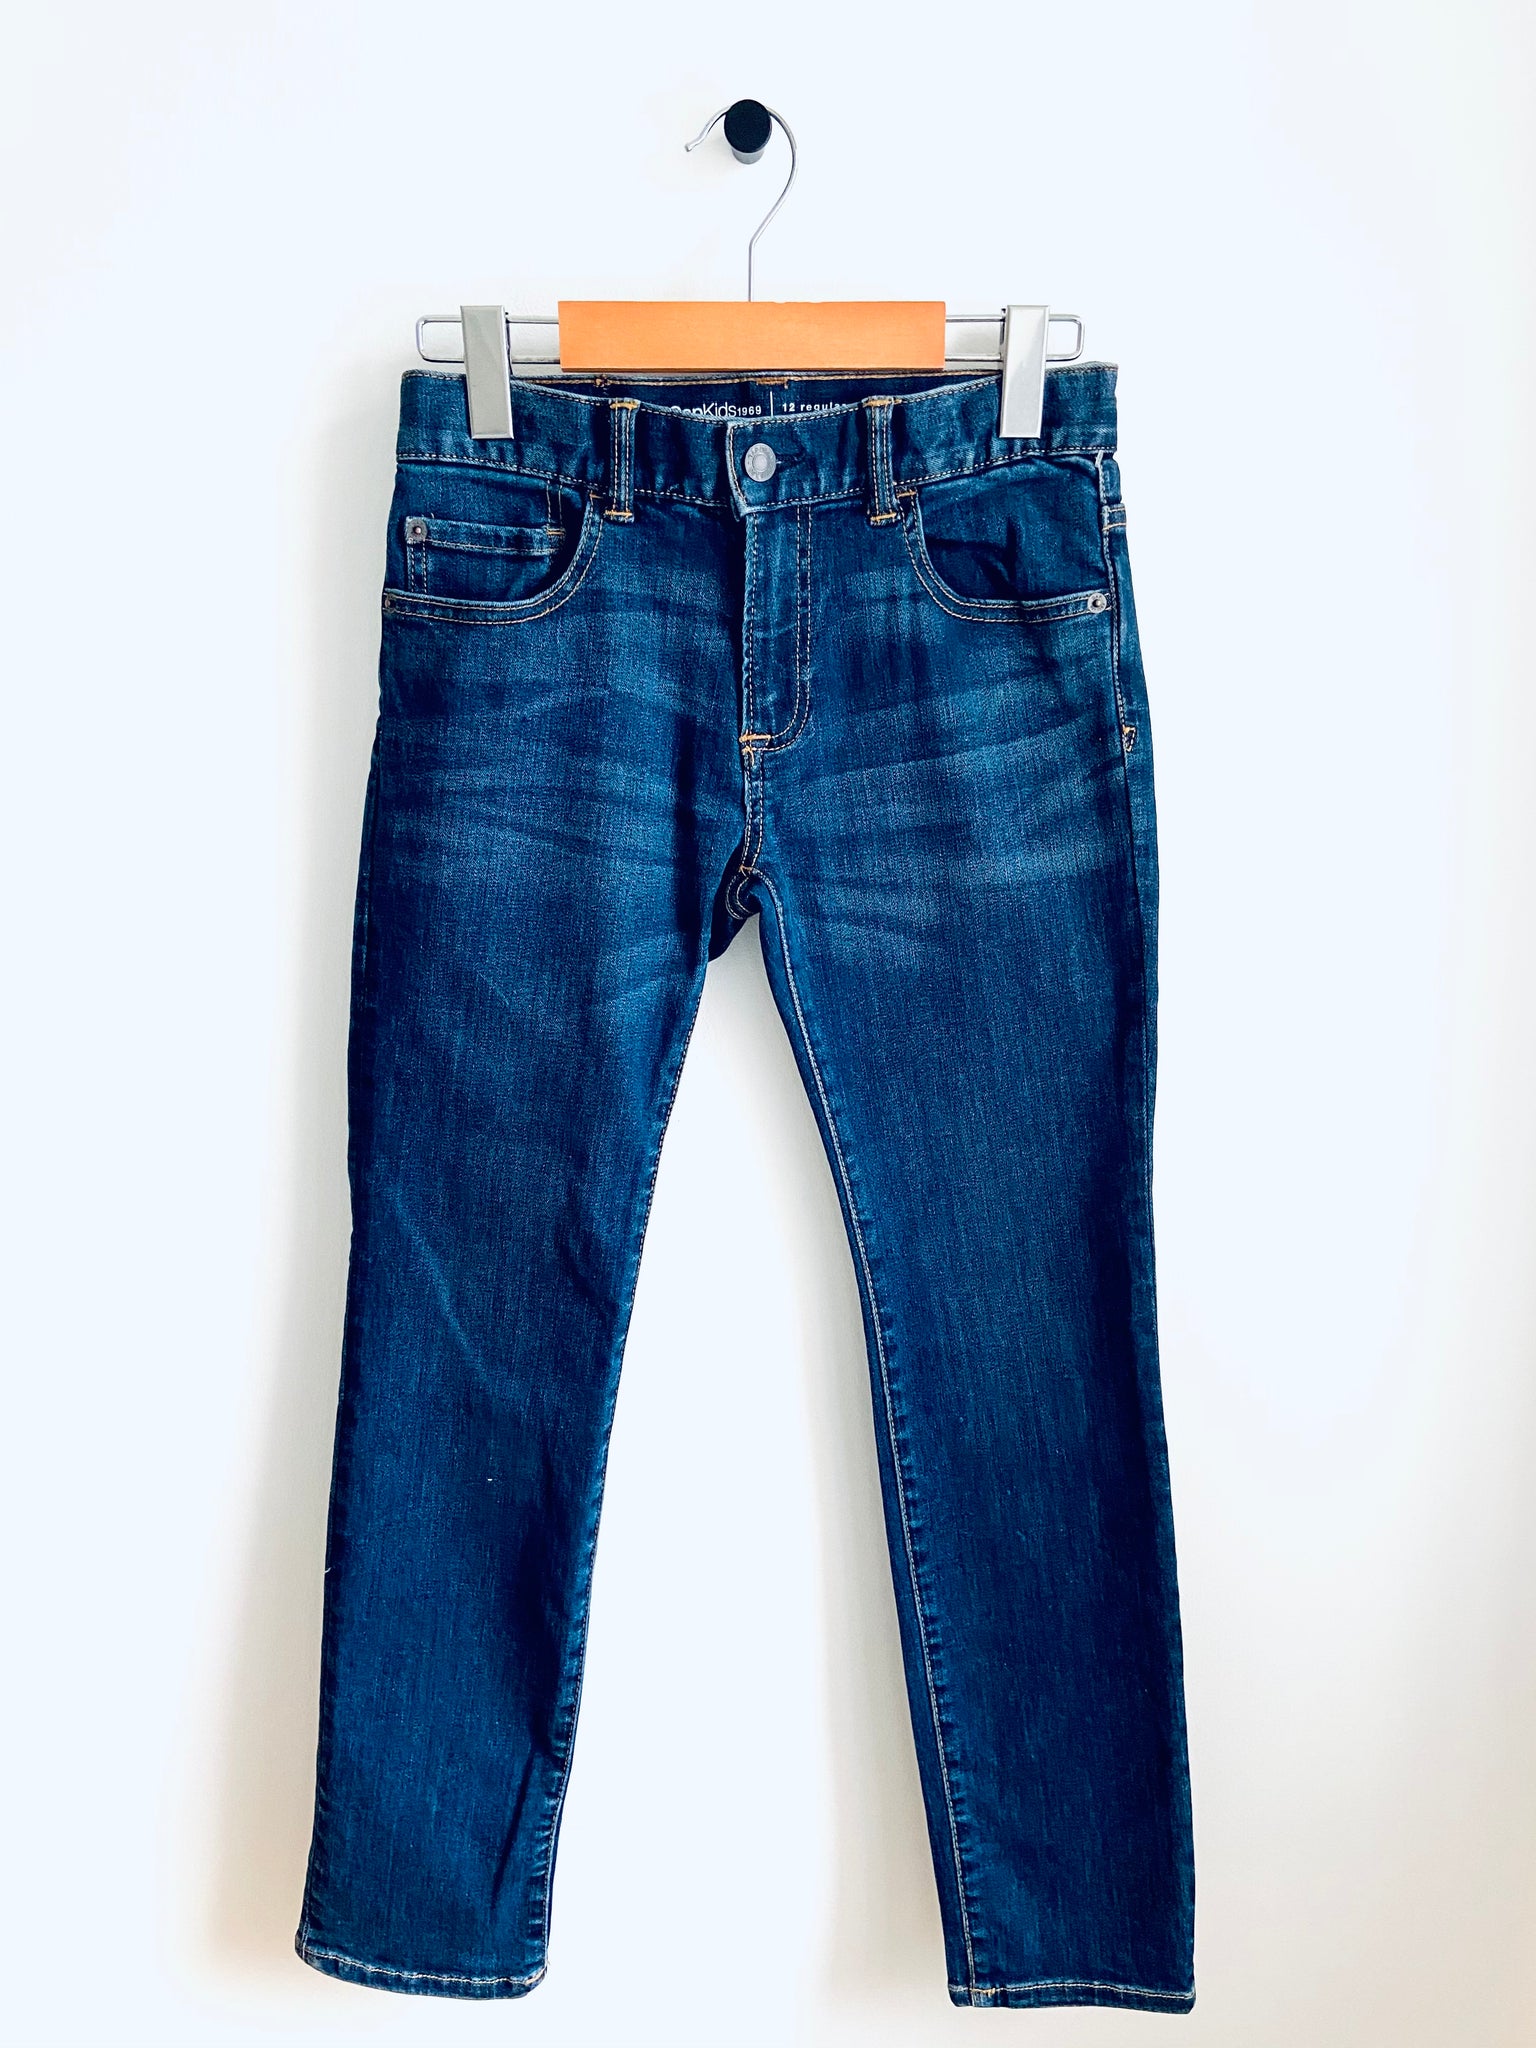 Gap | Original Dark Wash Denim Jeans (12Y)